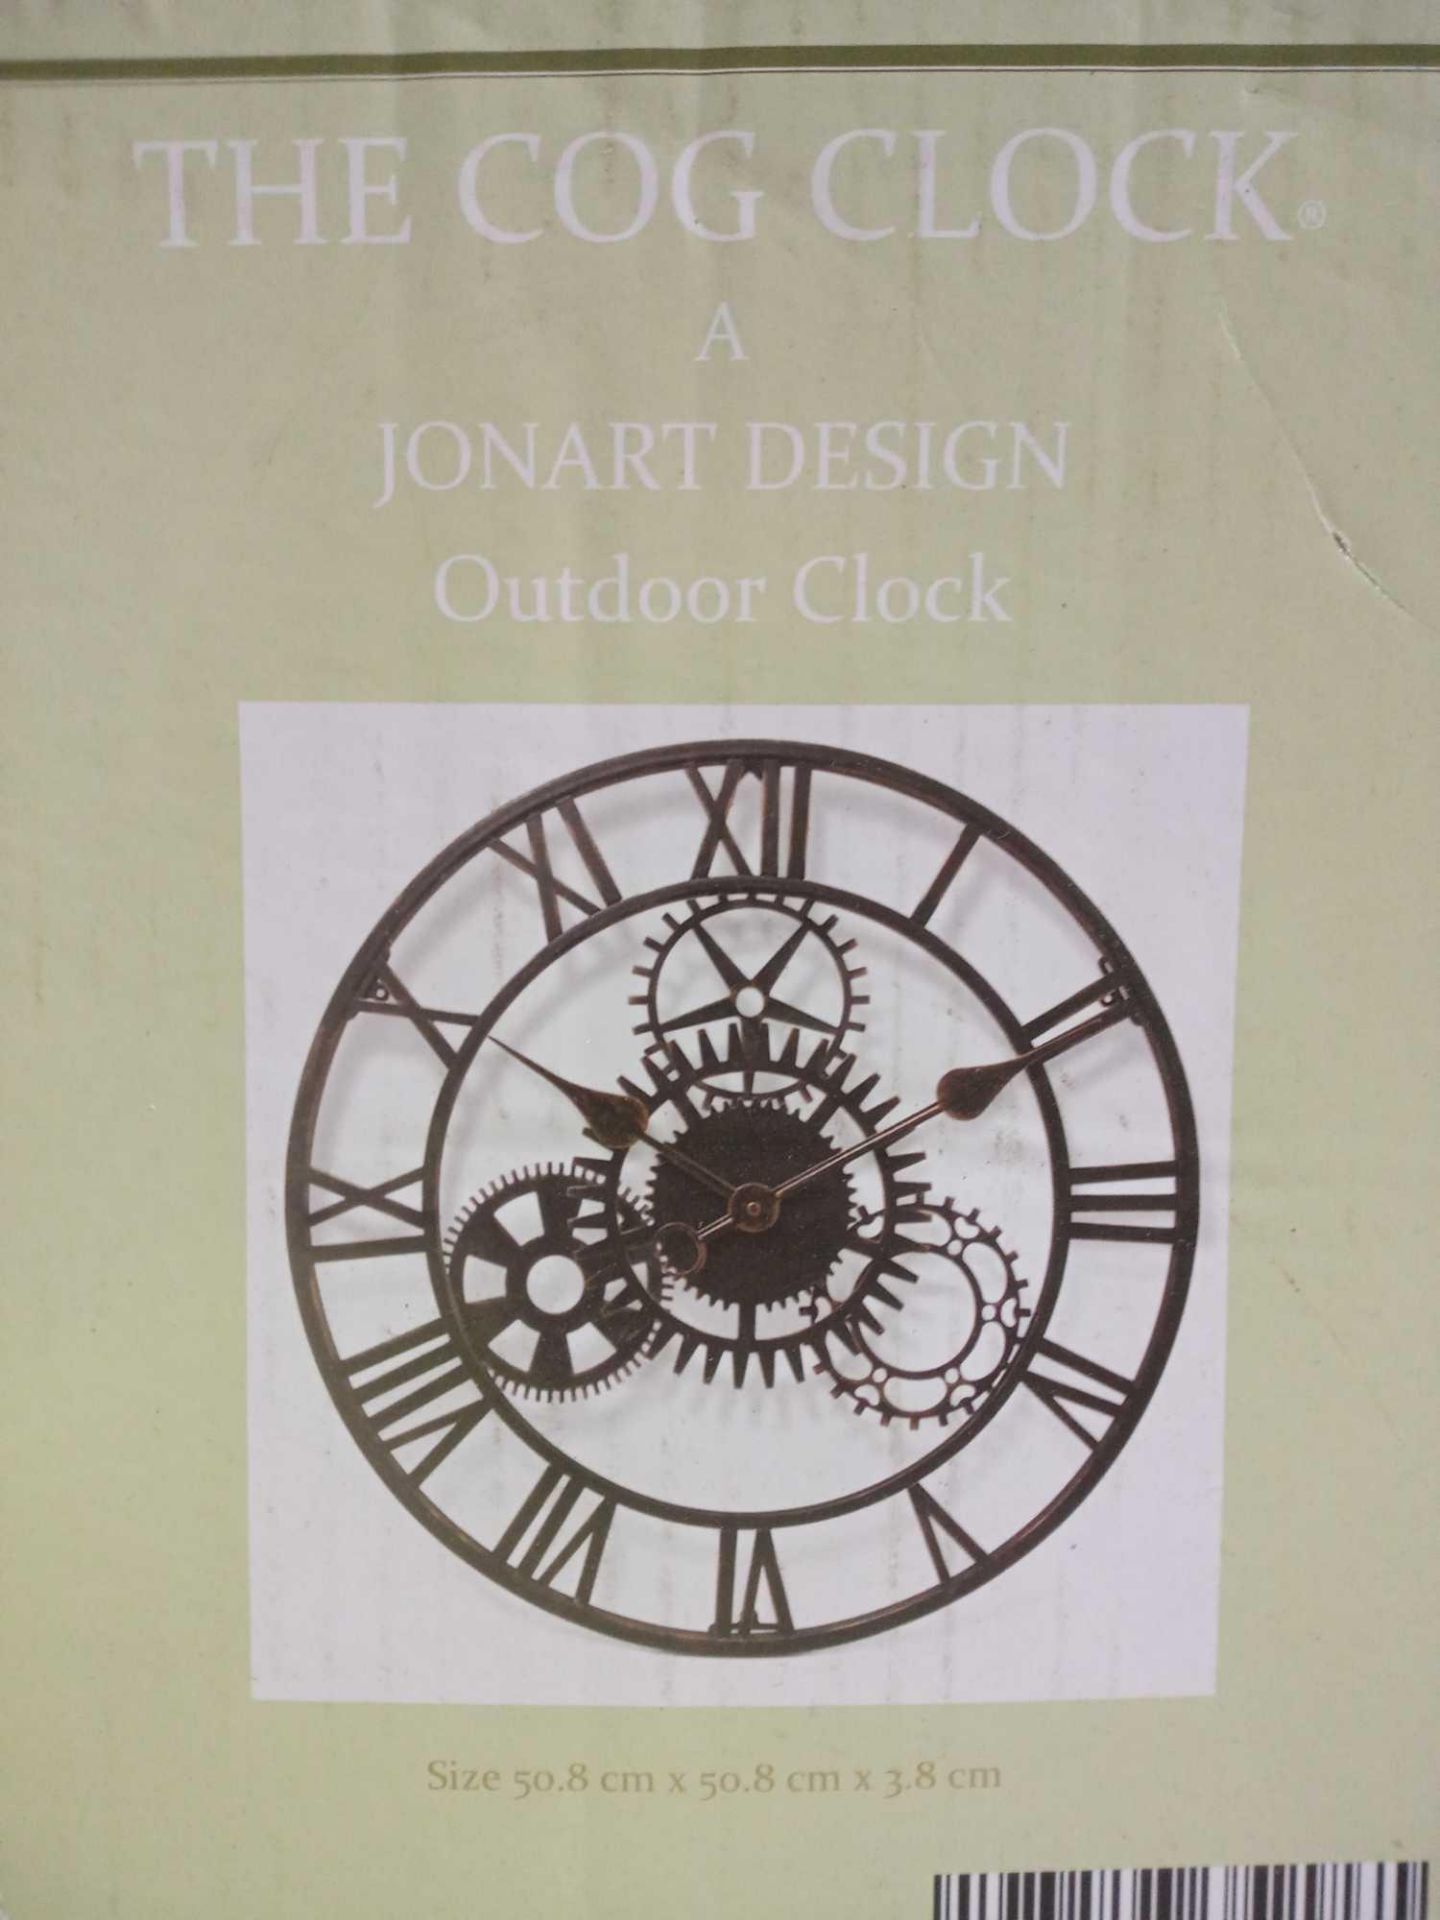 RRP £75 Boxed Joan Hart Design The Cog Clock Outdoor Wall Clock